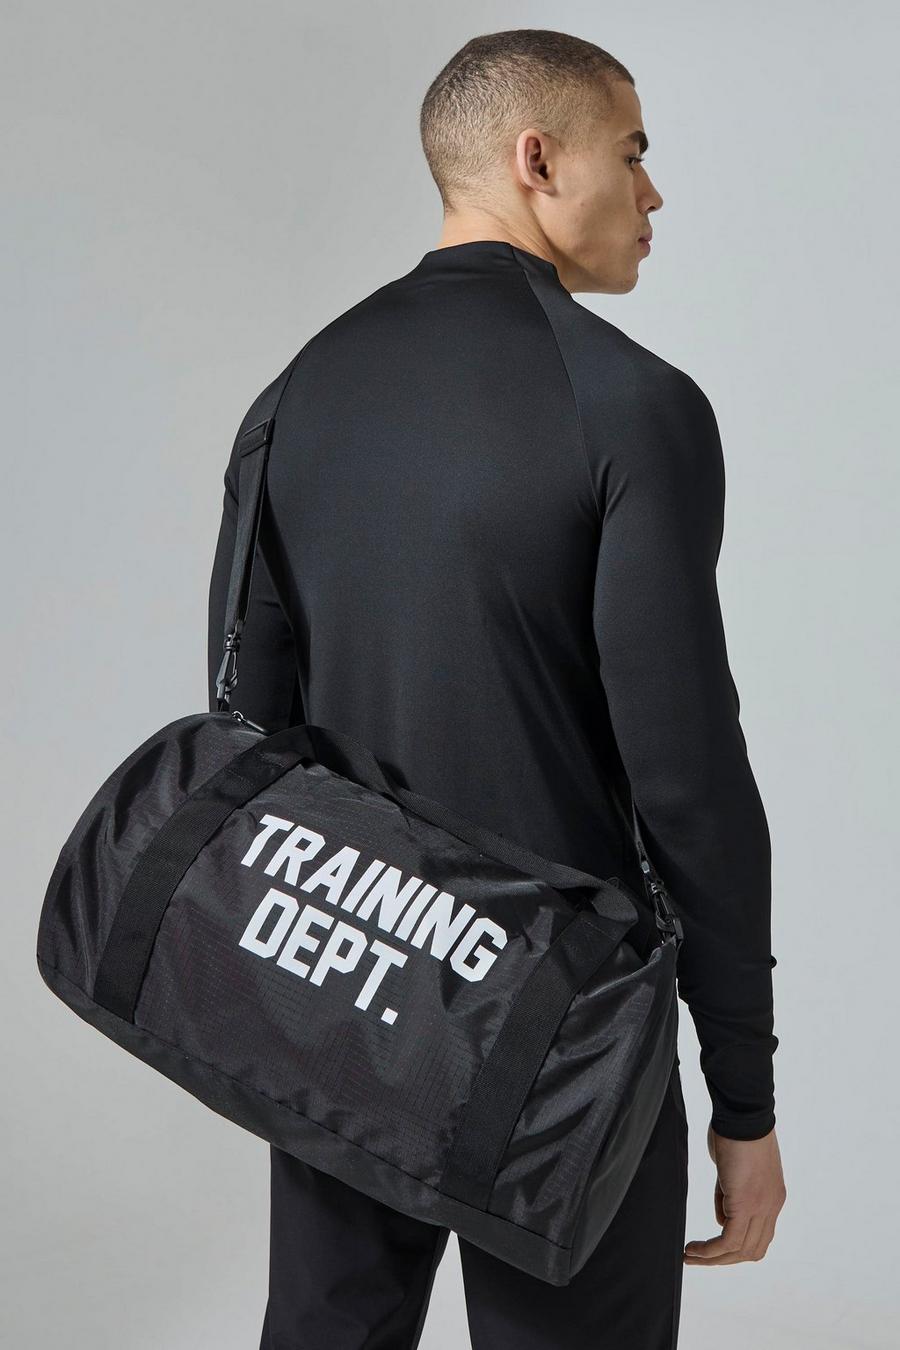 Active Training Dept Gym Barrel Tasche, Black